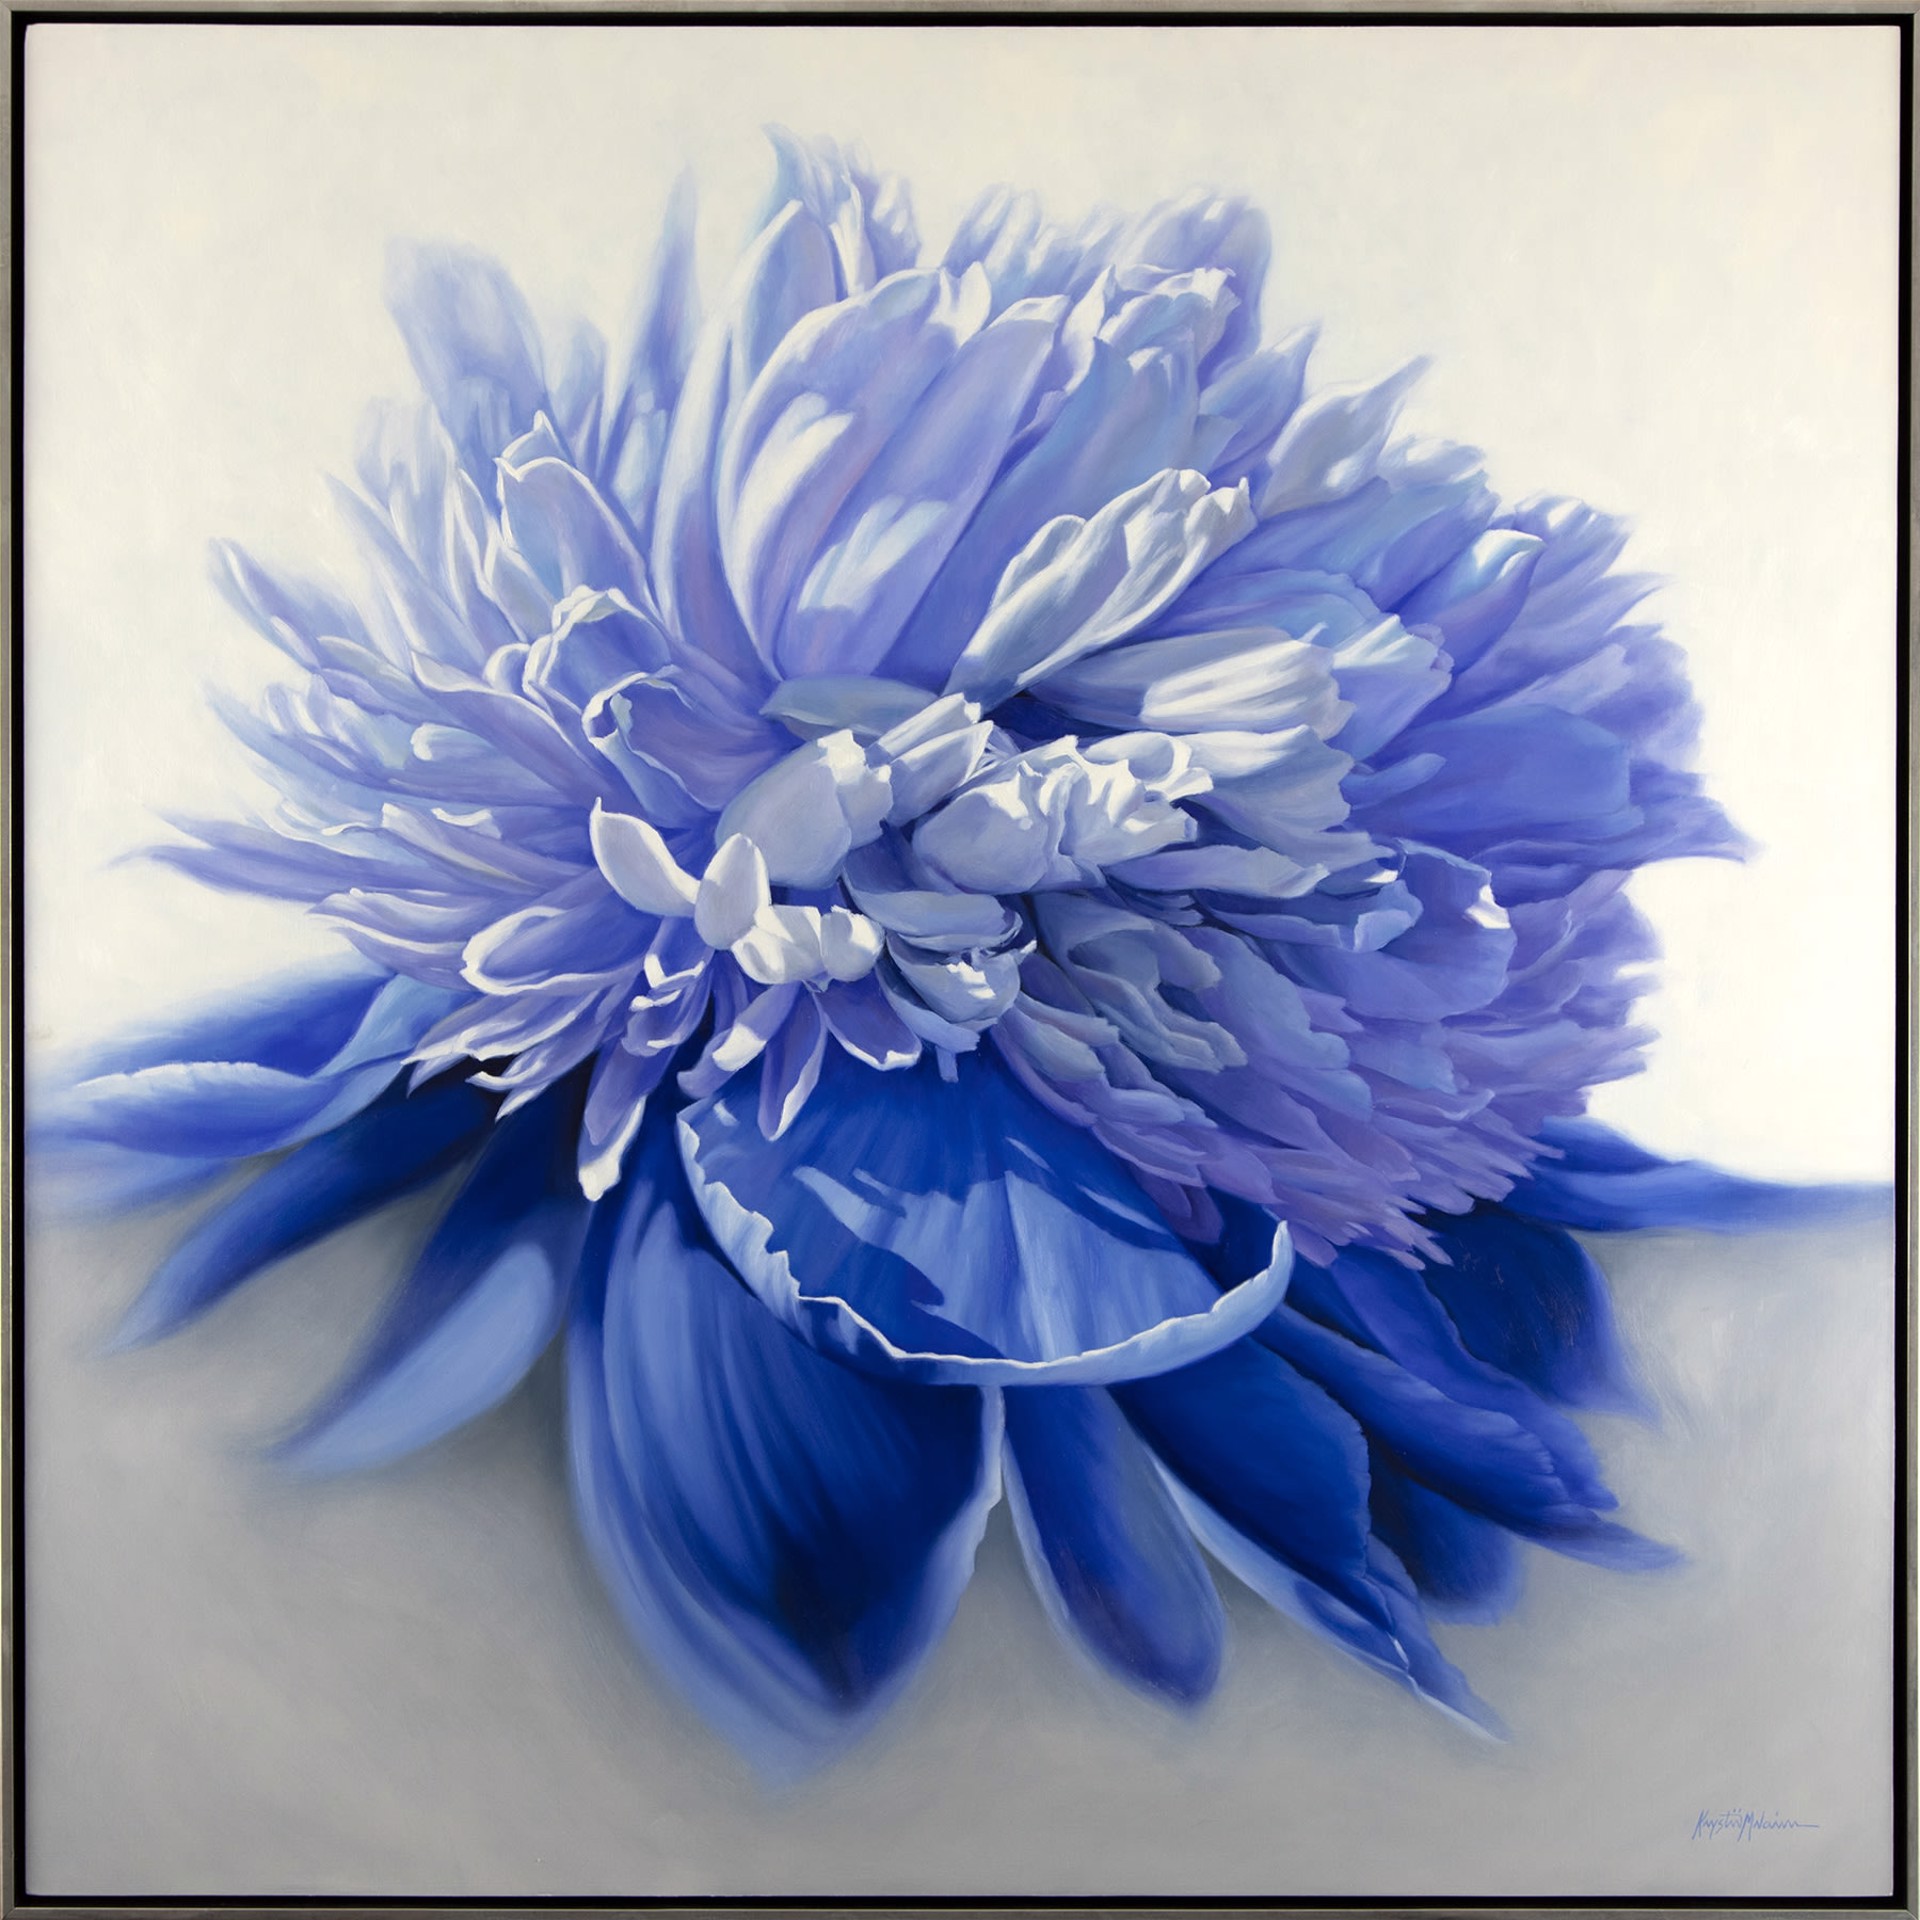 Big Blue Peony by Krystii Melaine